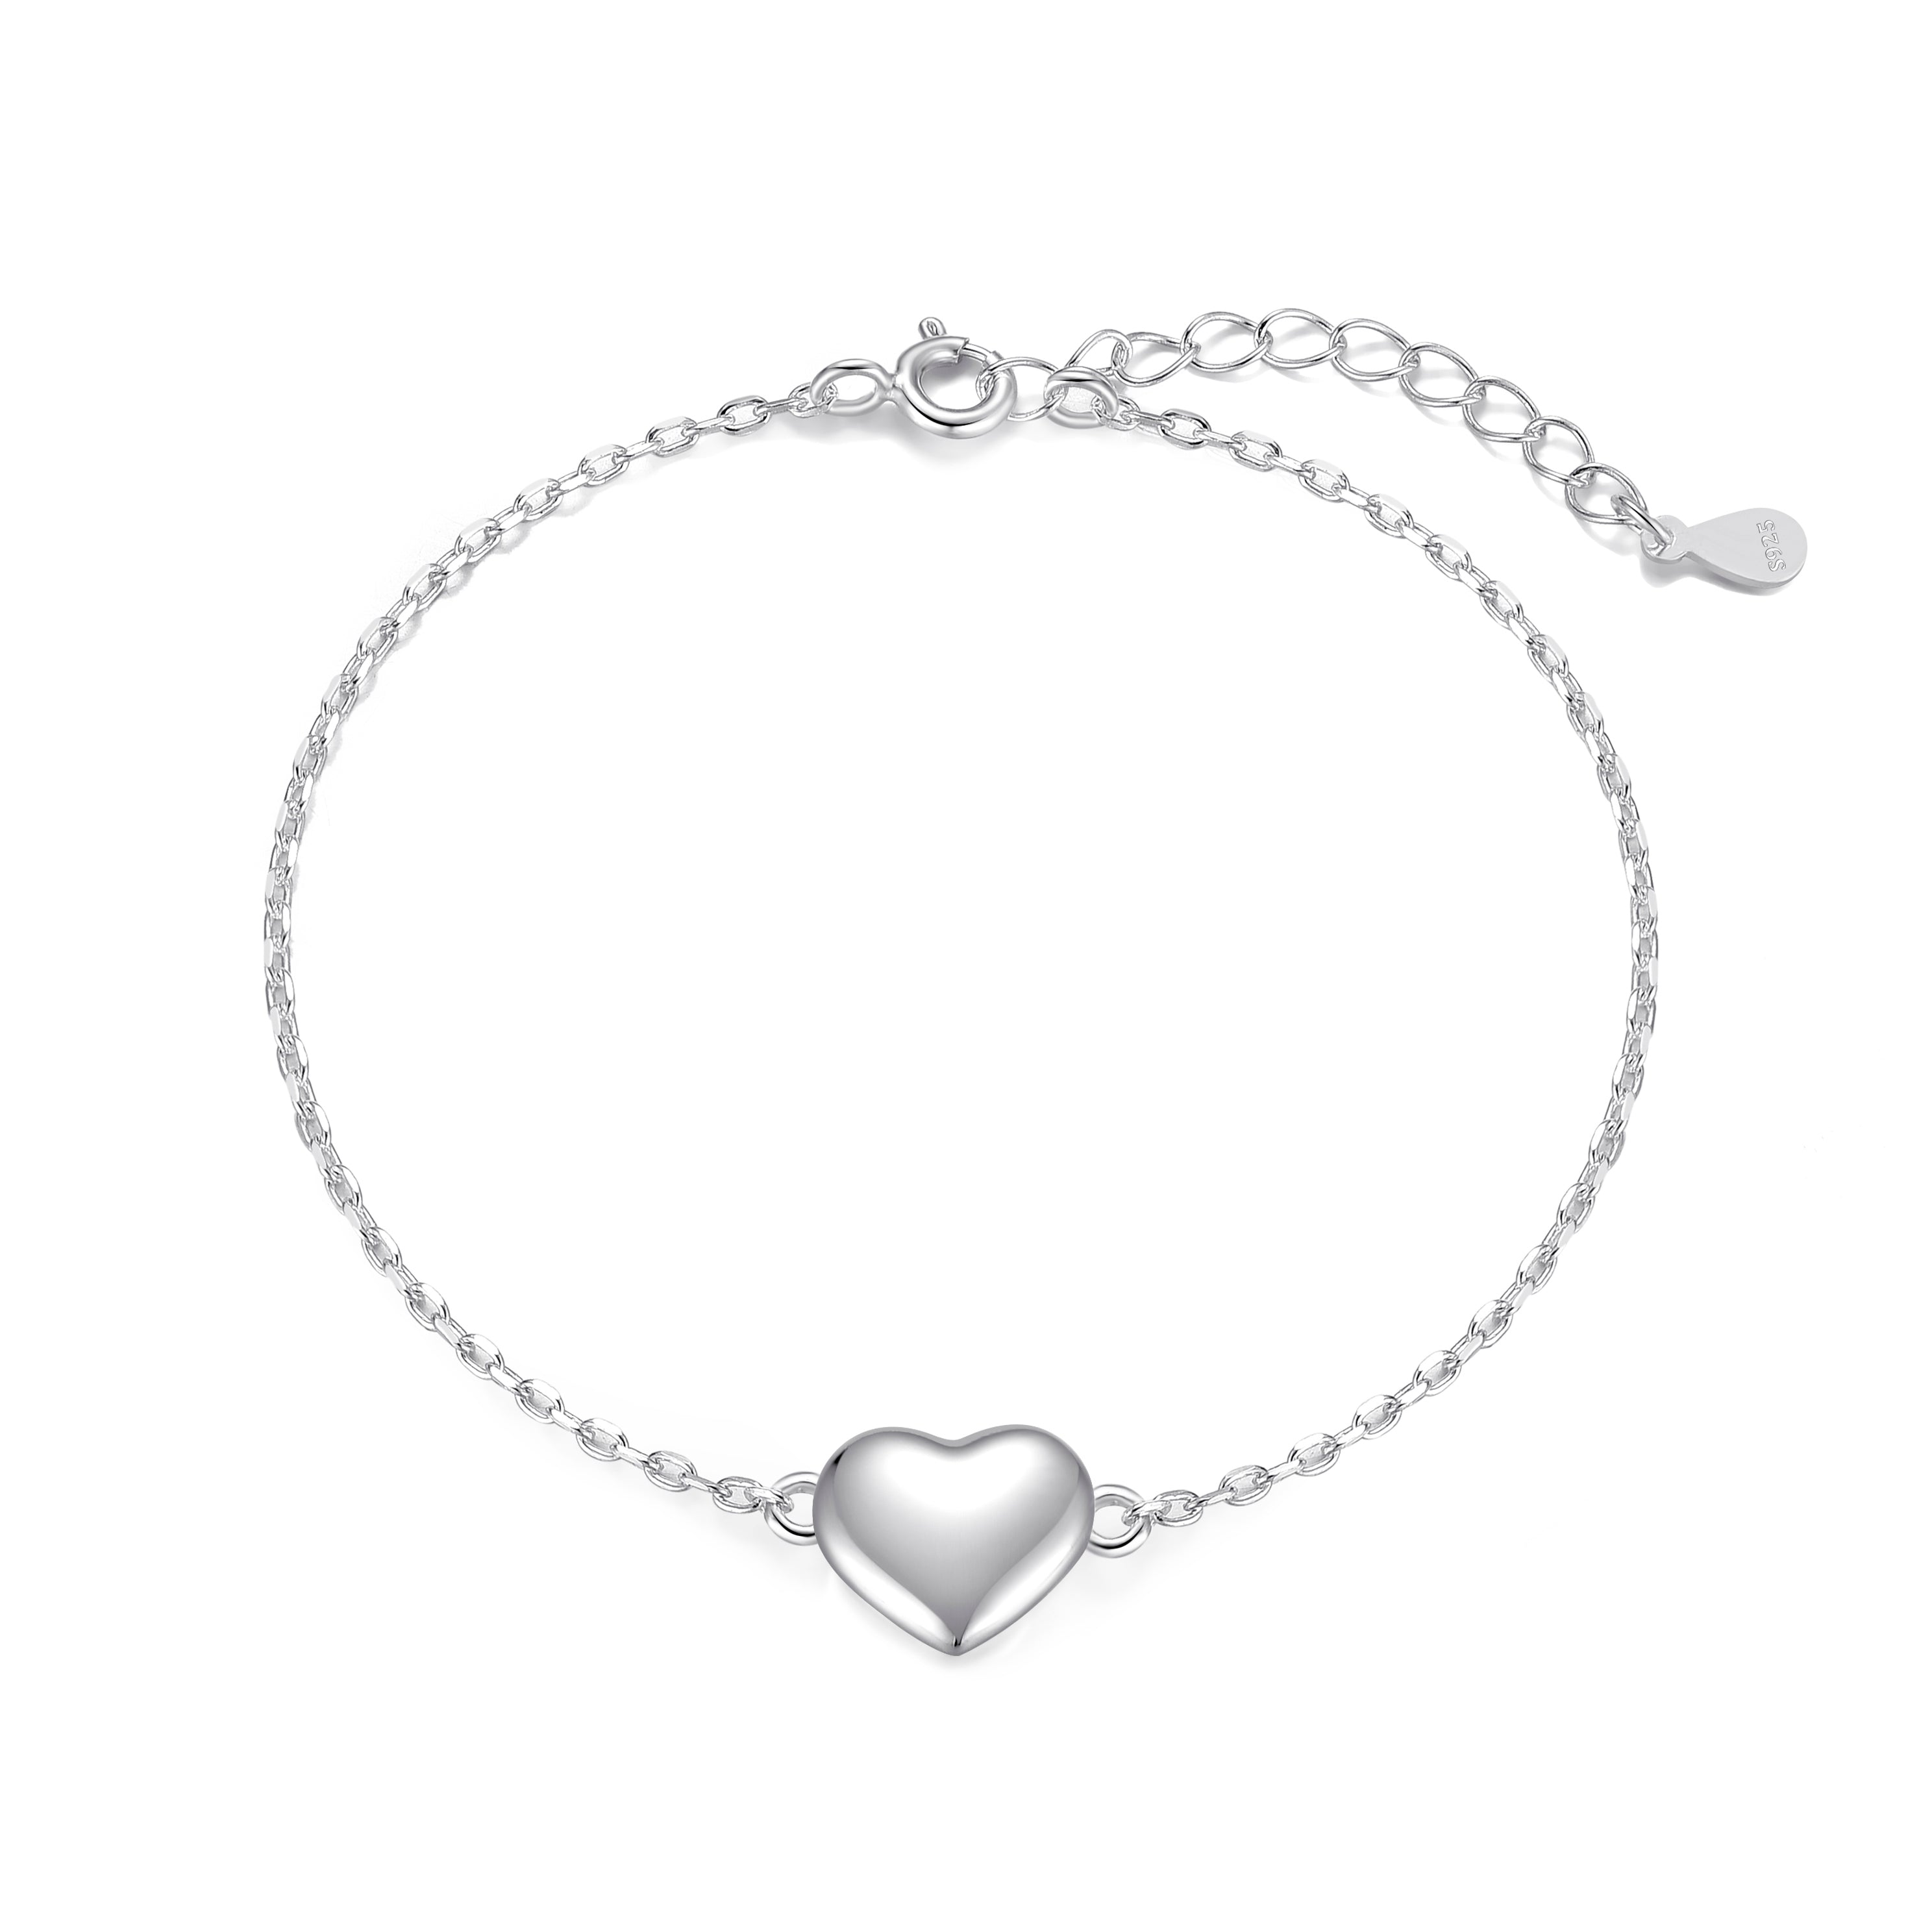 Sterling Silver Friendship Quote Heart Bracelet